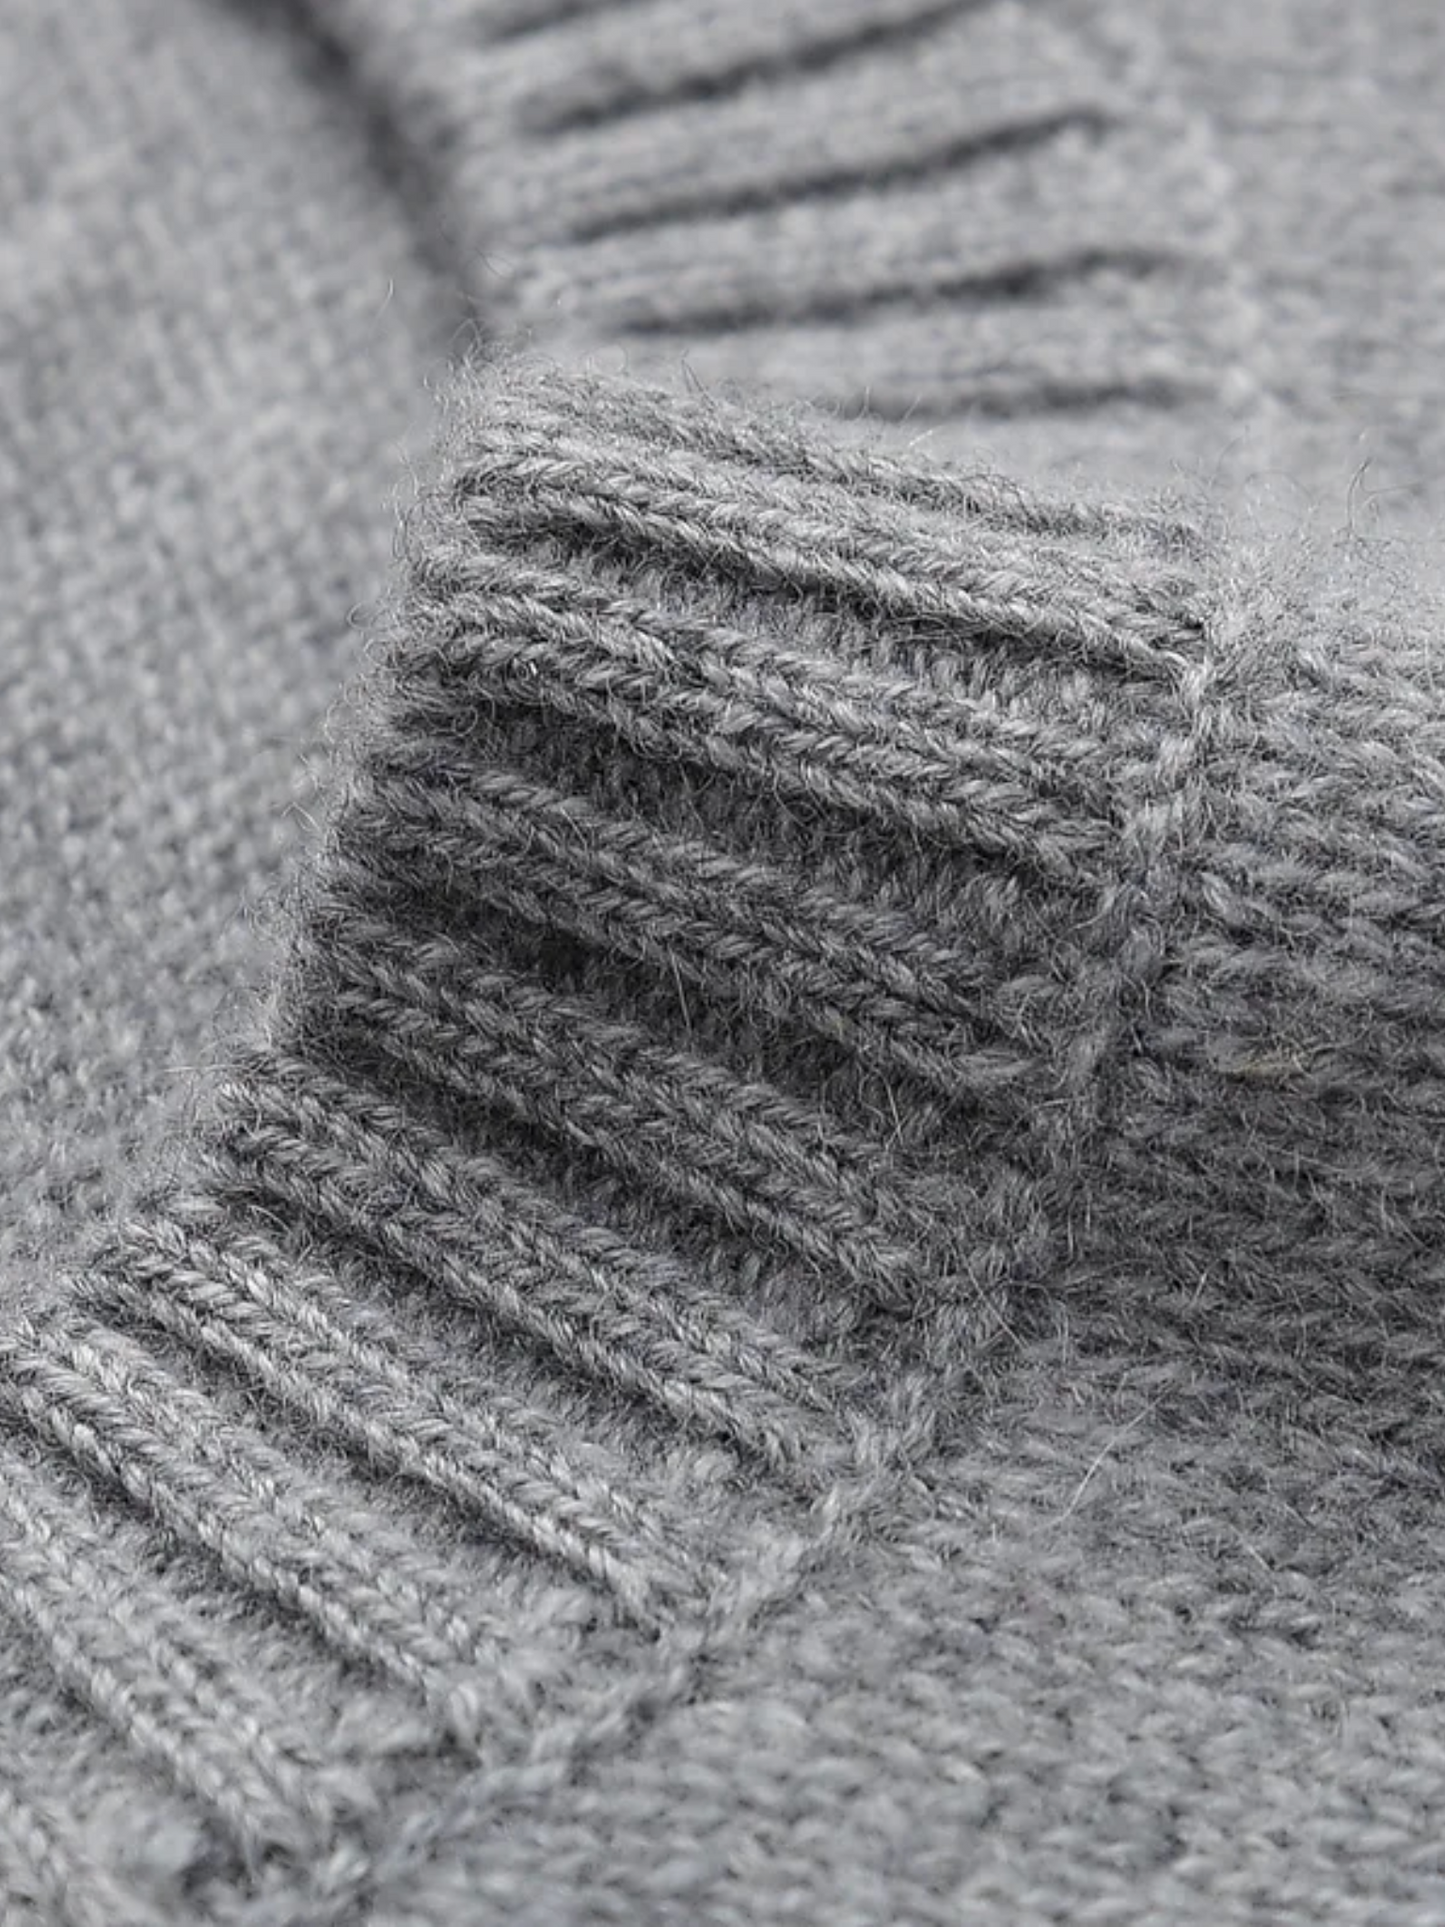 Crewneck Cashmere Sweater - Dark Gray